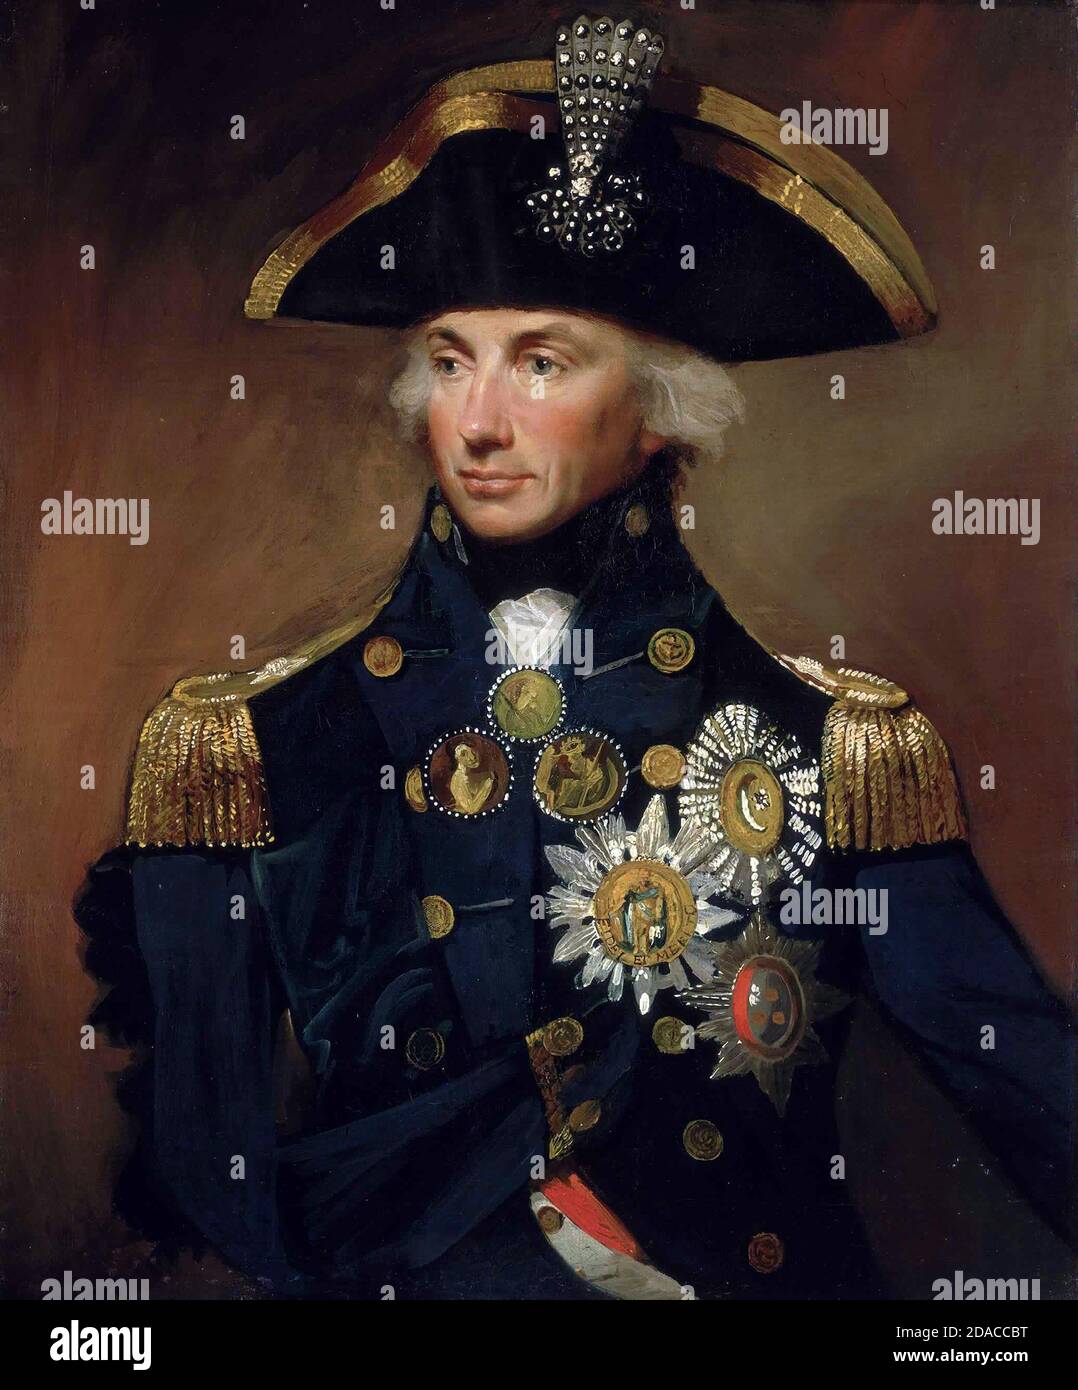 HORATIO NELSON, 1st Viscount Nelson (1758-1805) Senior British flag officer in the Royal Navy. The 1799 portrait by Lemuel Abbott. Stock Photo